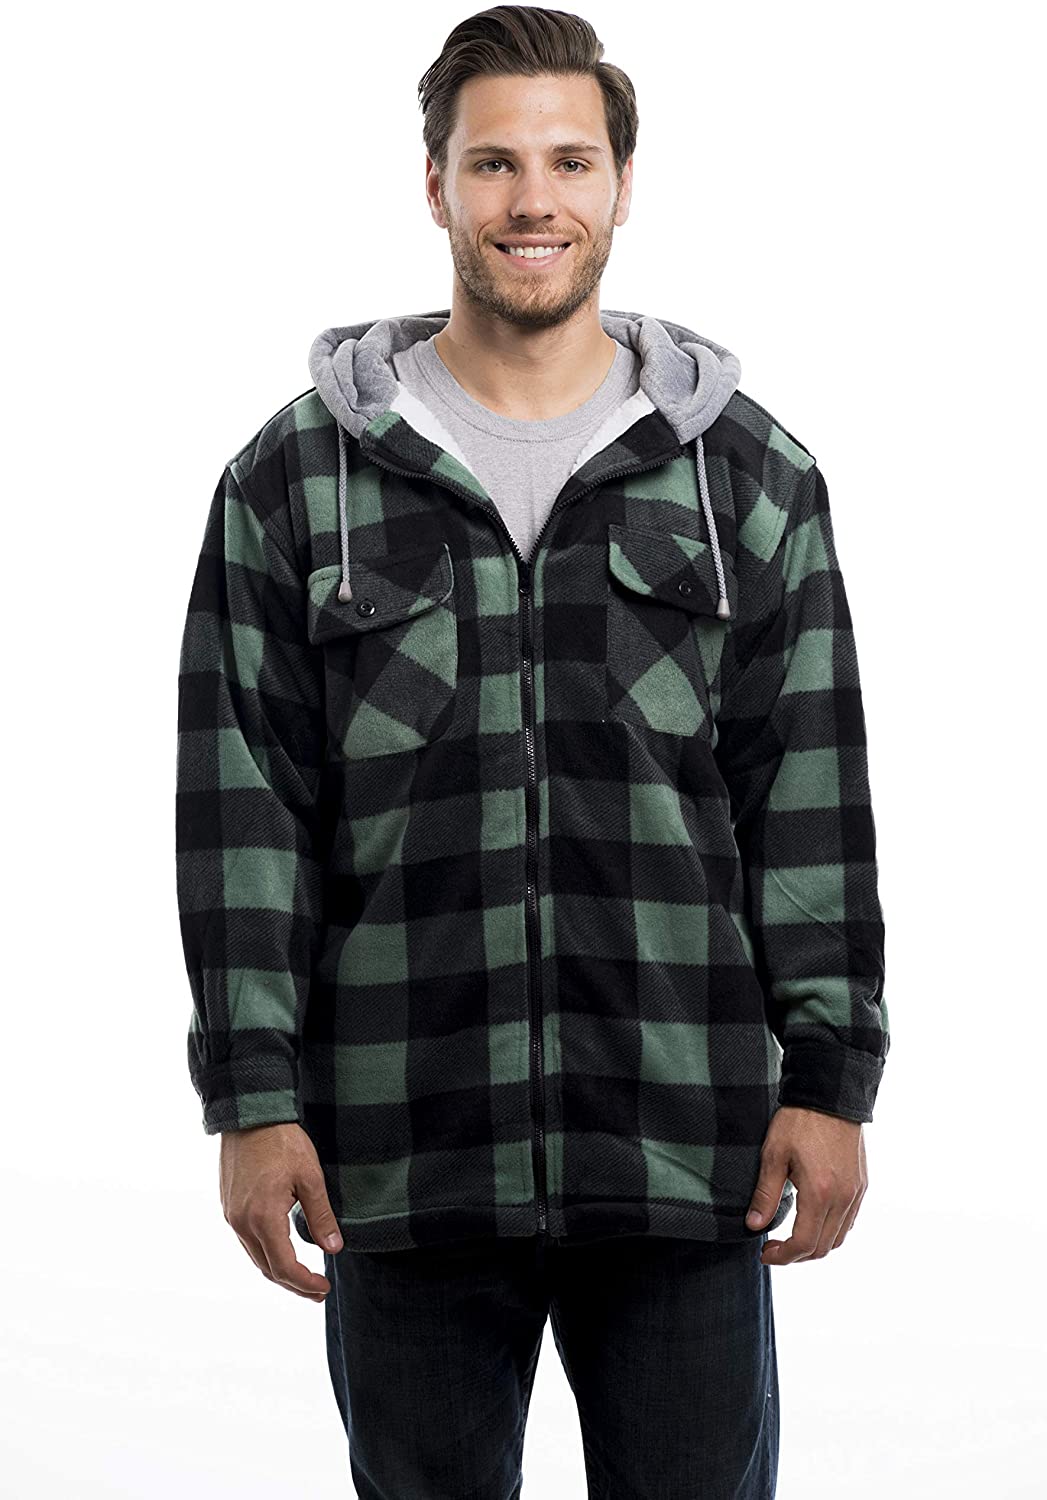 TrailCrest Men's Warm Sherpa Lined Hoodie Fleece Shirt Jacket